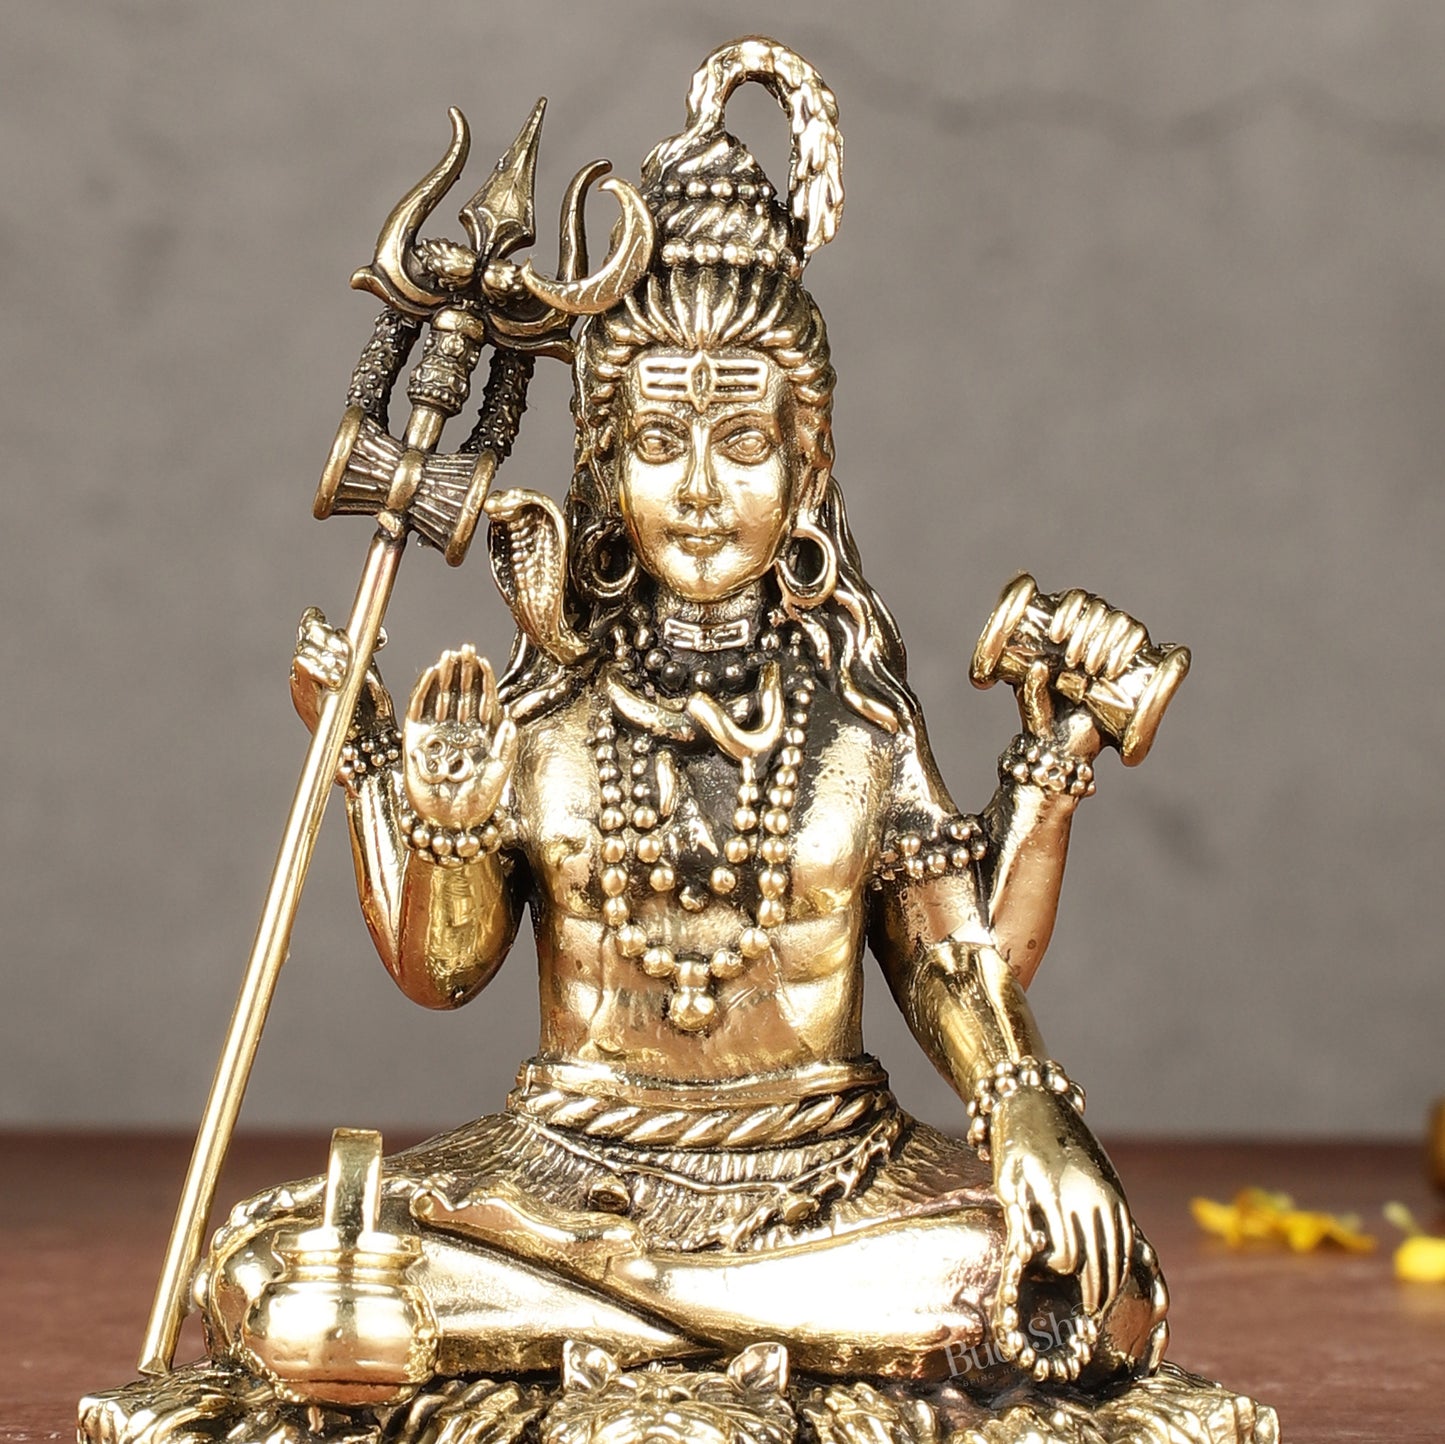 Brass Superfine Intricately Crafted Lord Shiva Idol - 4"